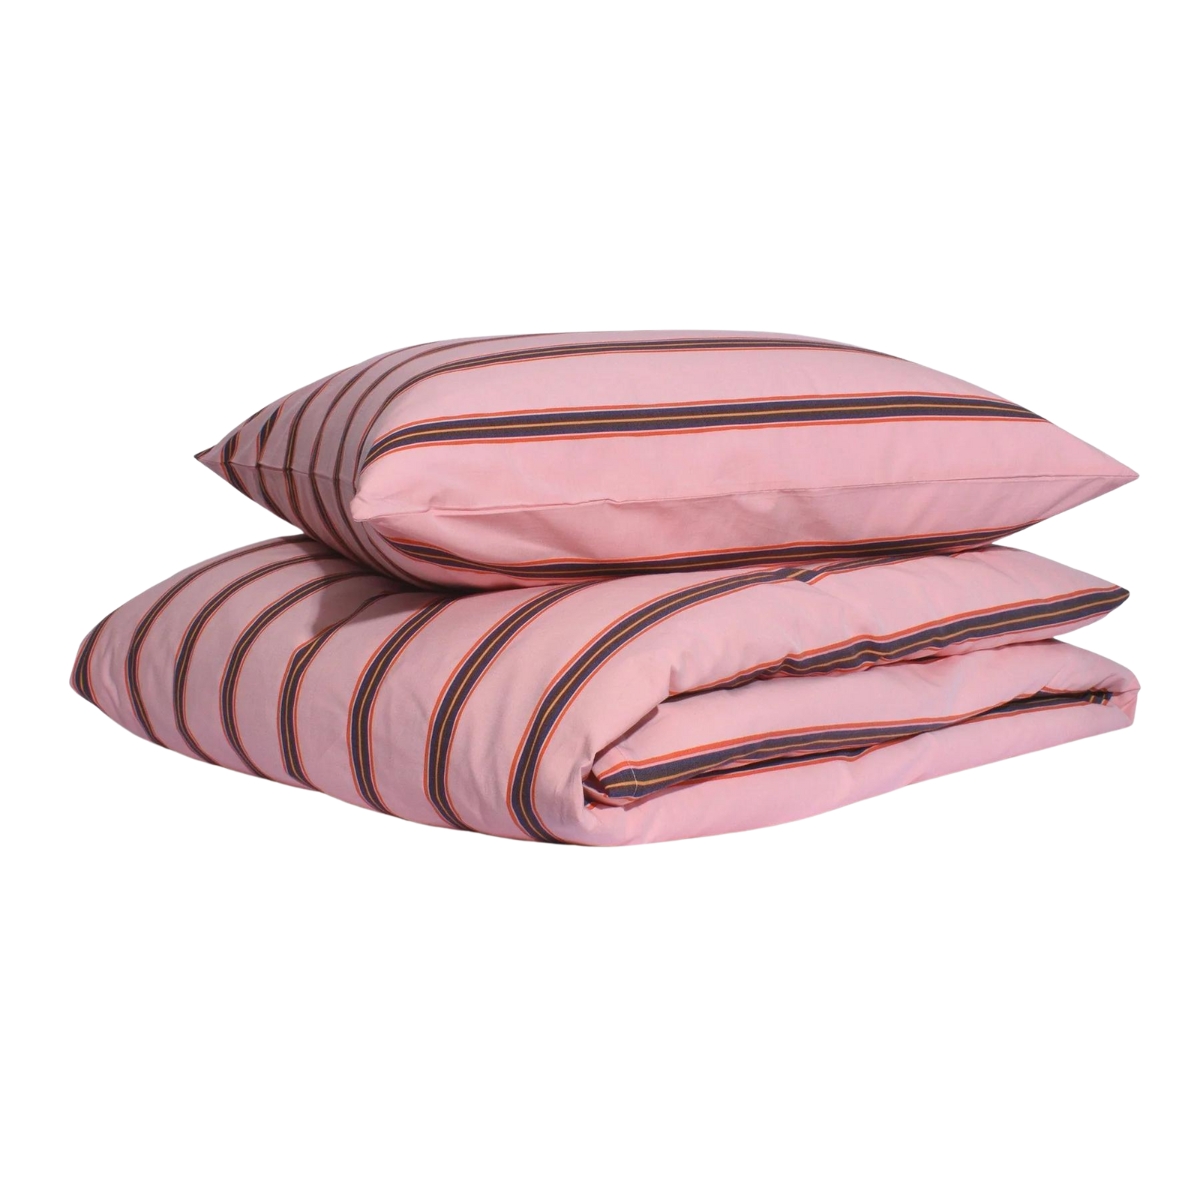 Homehagen Sateen Cotton King Duvet Set - Pink Stripe